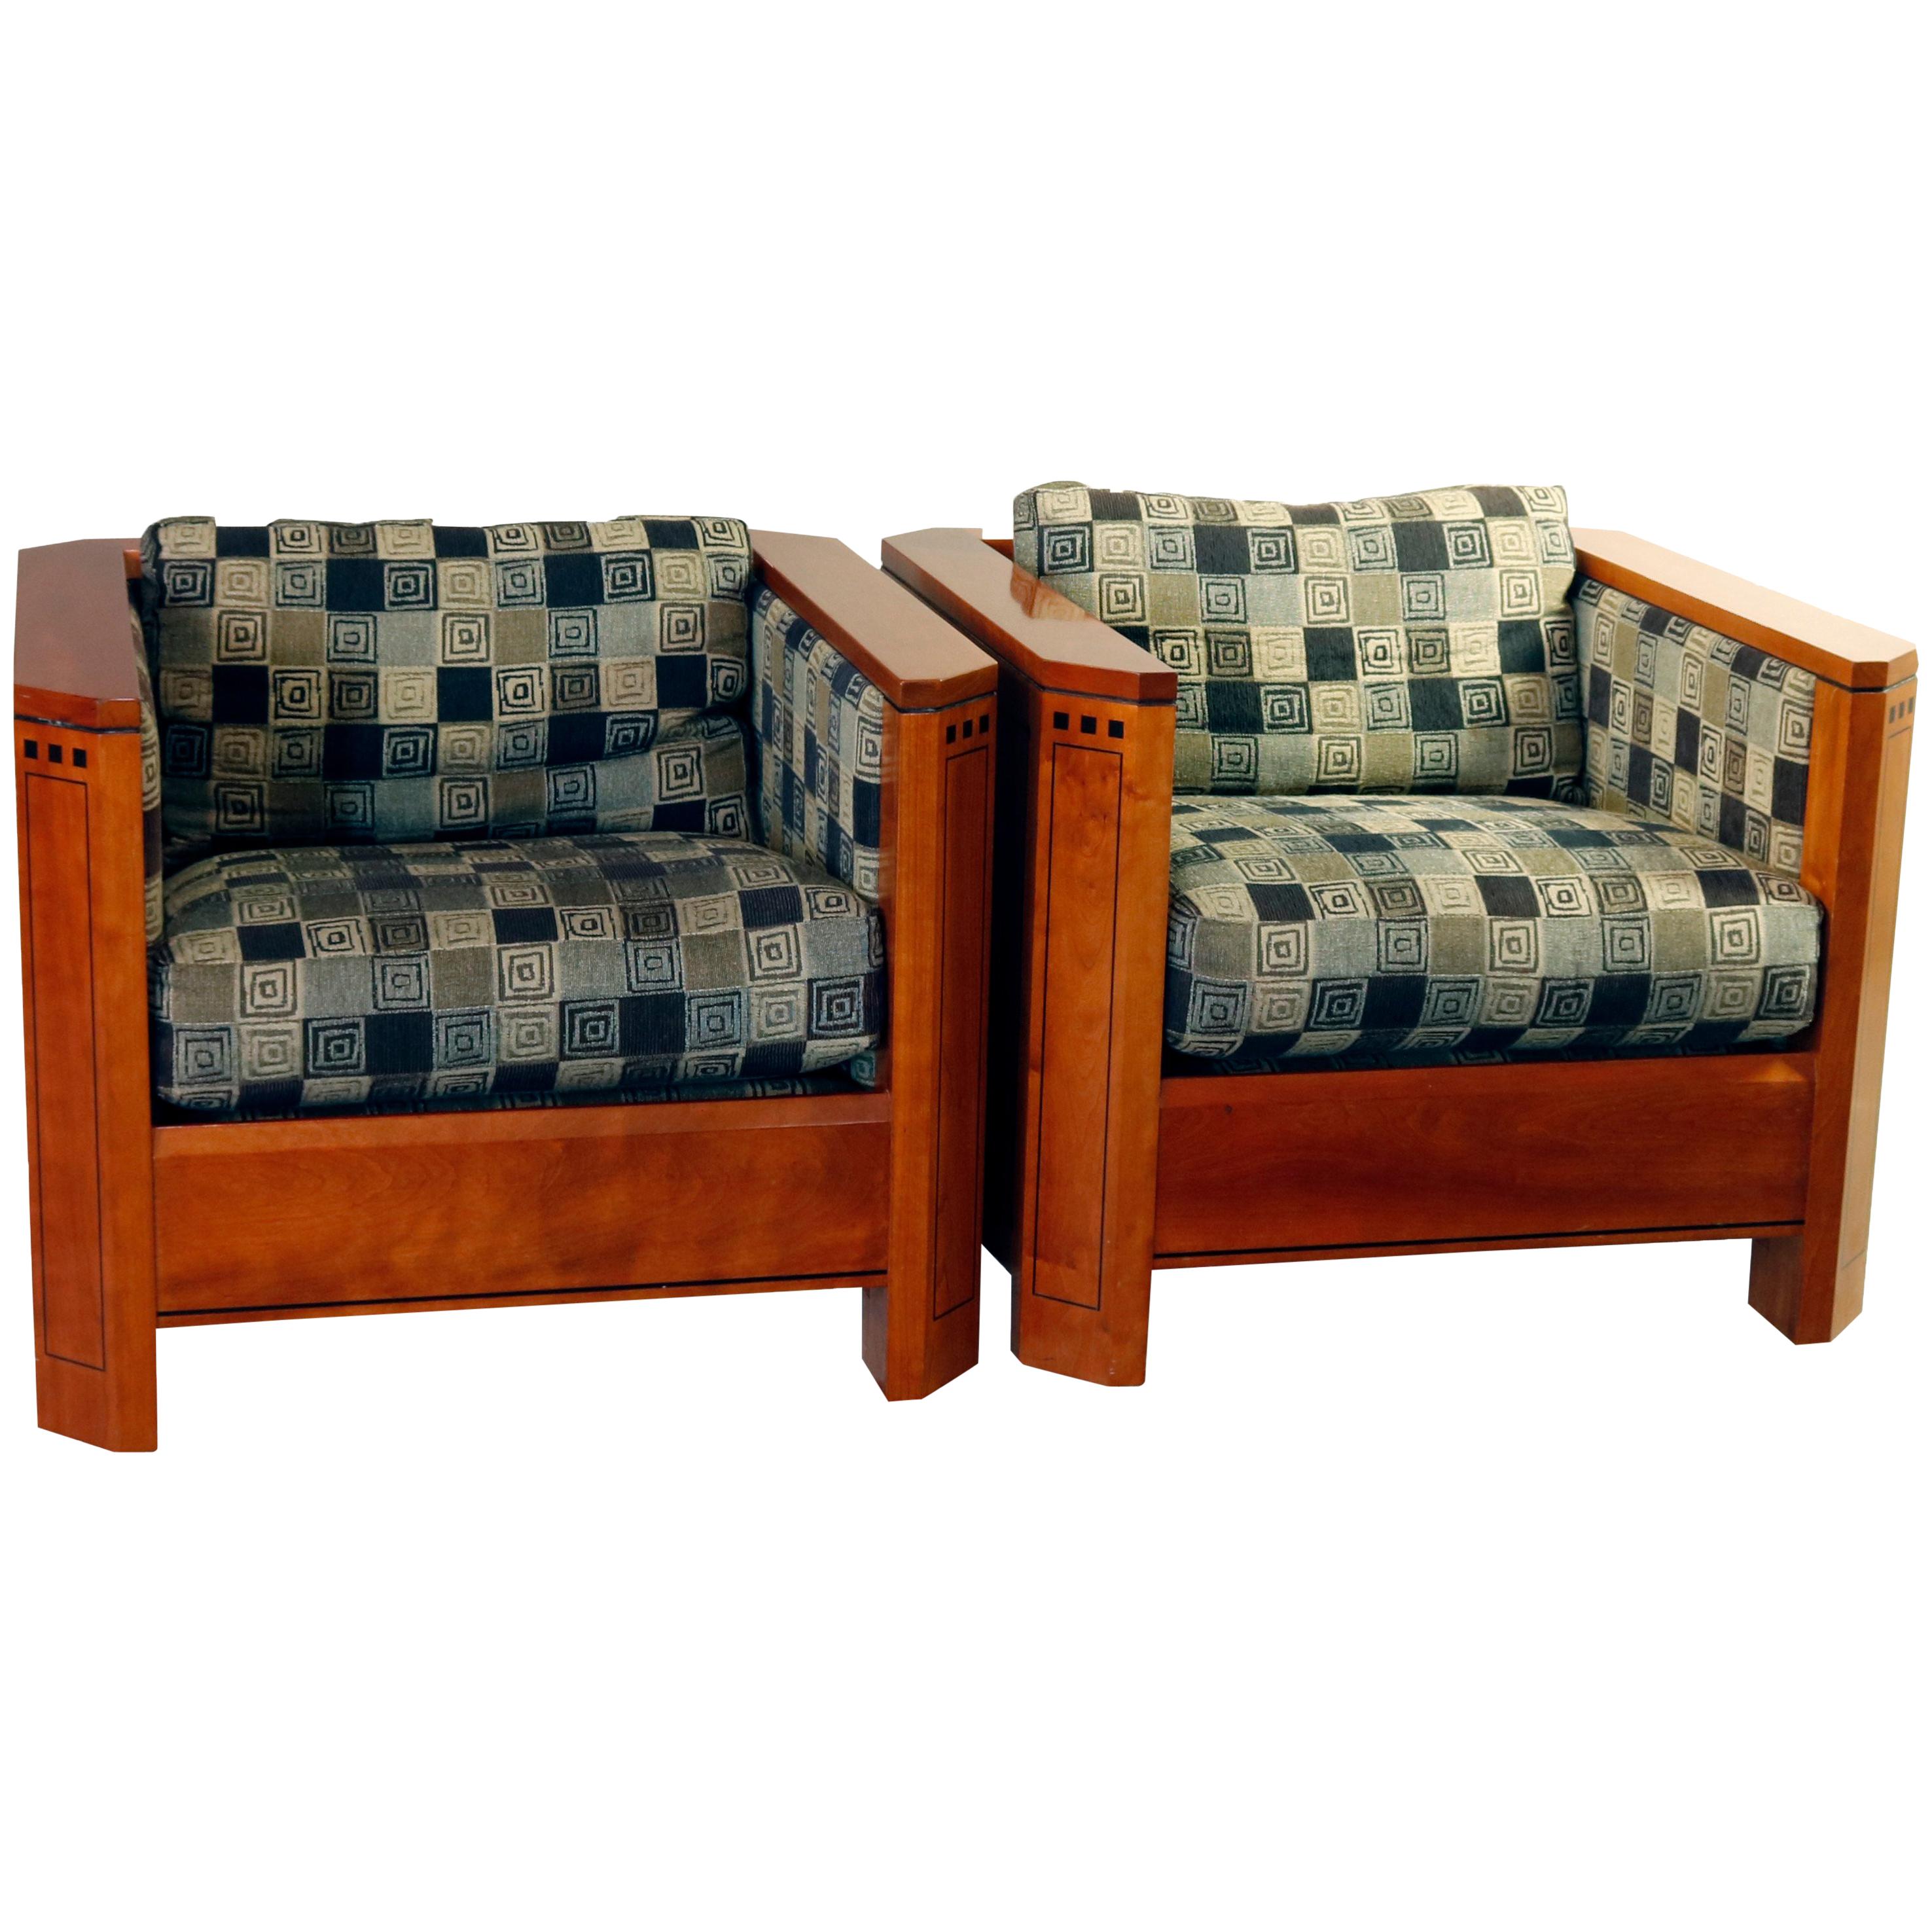 Frank Lloyd Wright Prairie School Arts & Crafts Style Cherry Cube Chairs